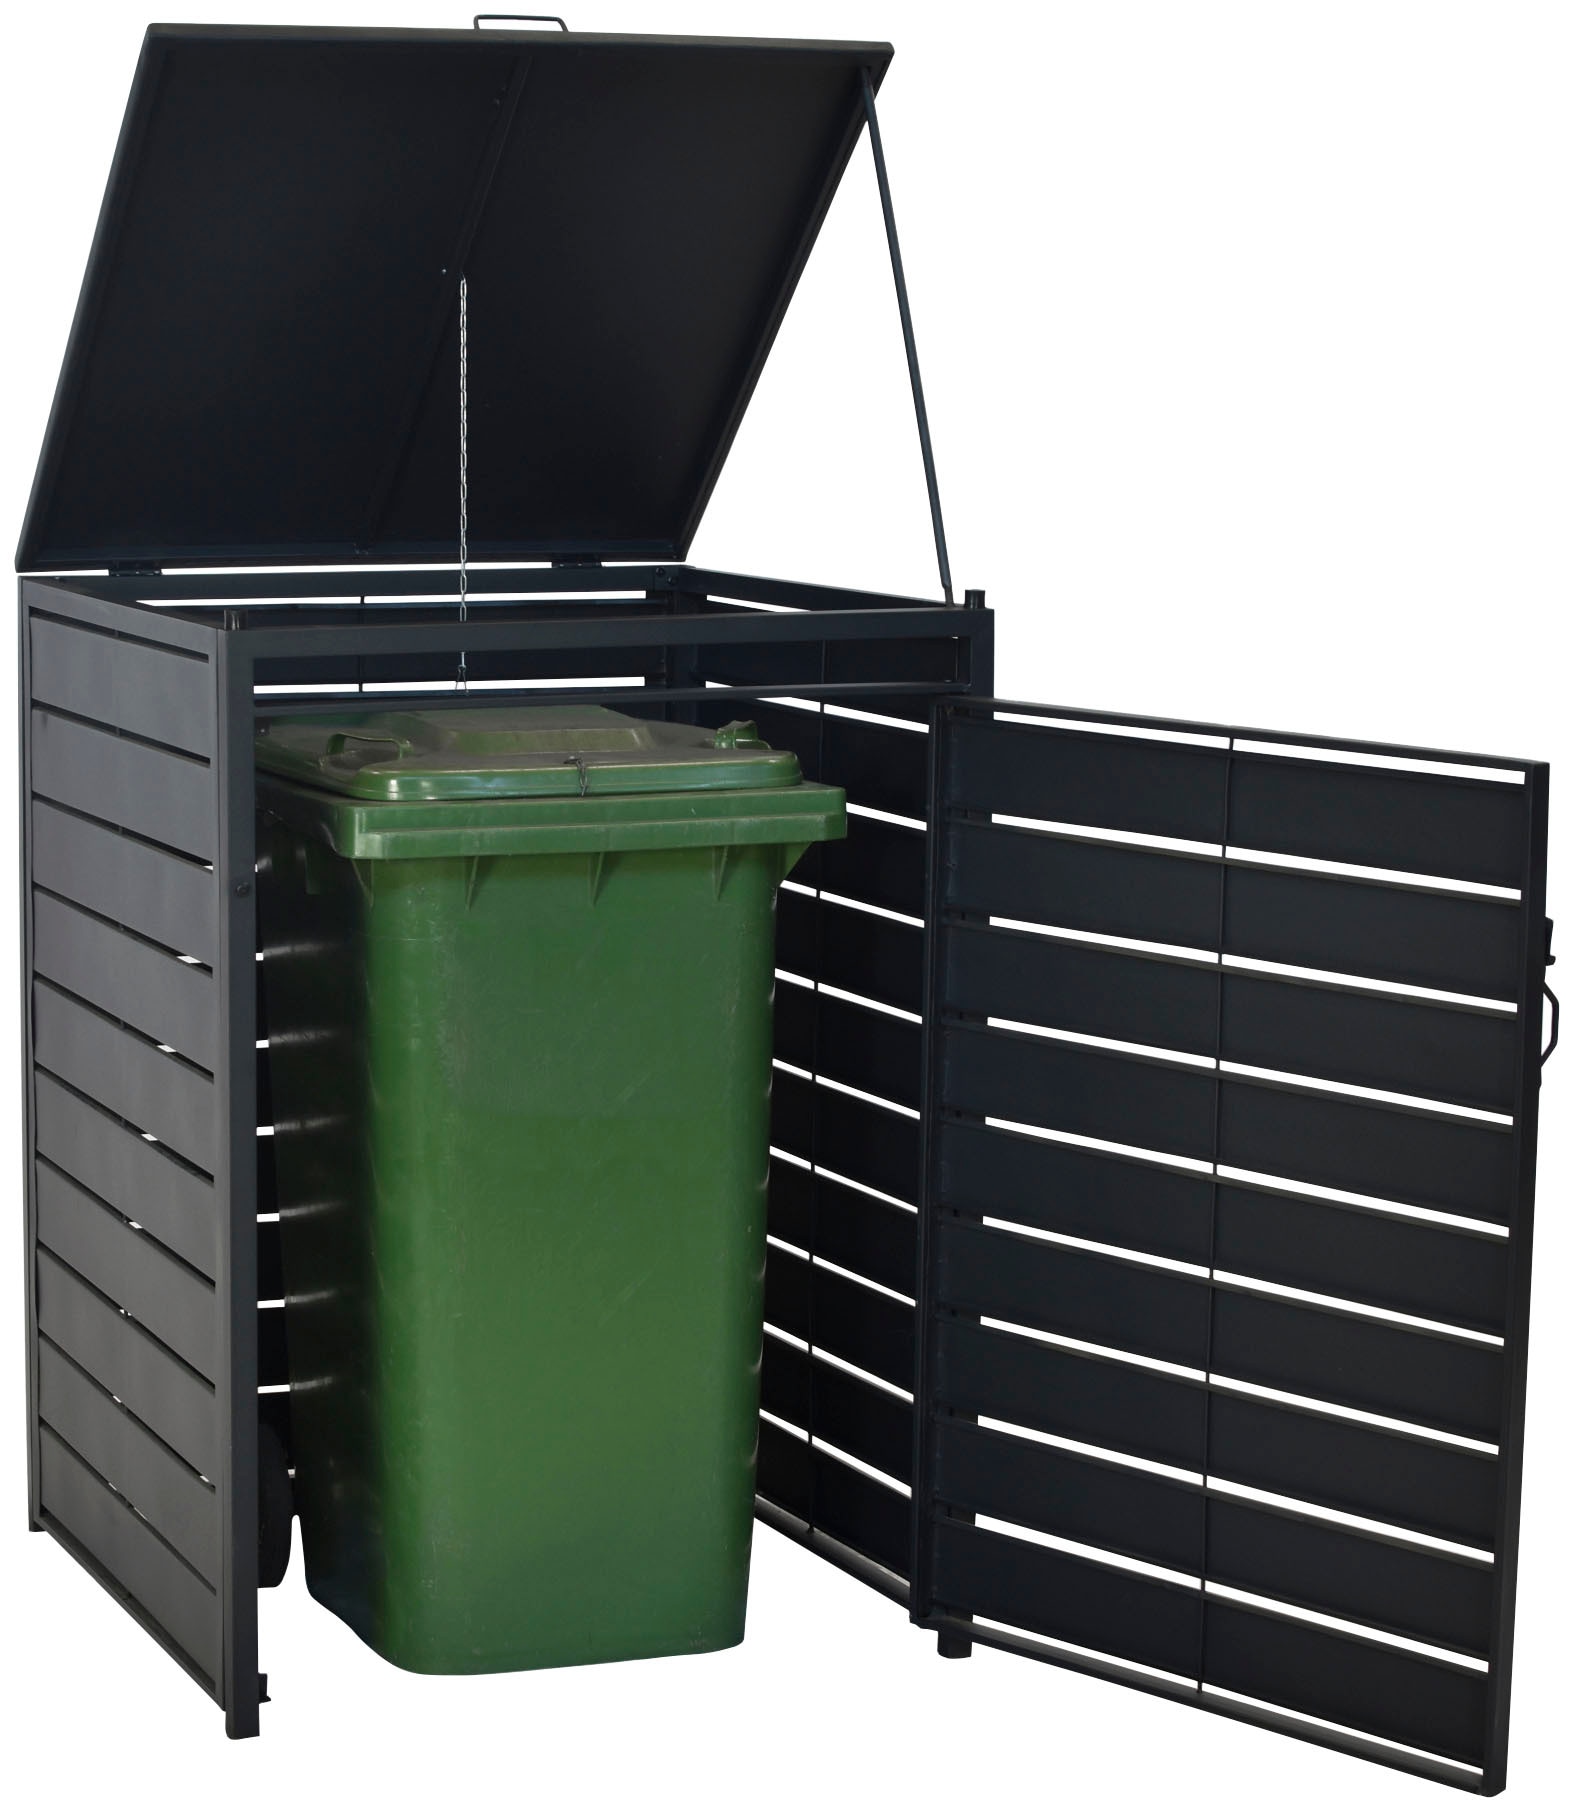 MERXX Mülltonnenbox »Basis Alu/Stahl«, für 120 Liter Mülltonne